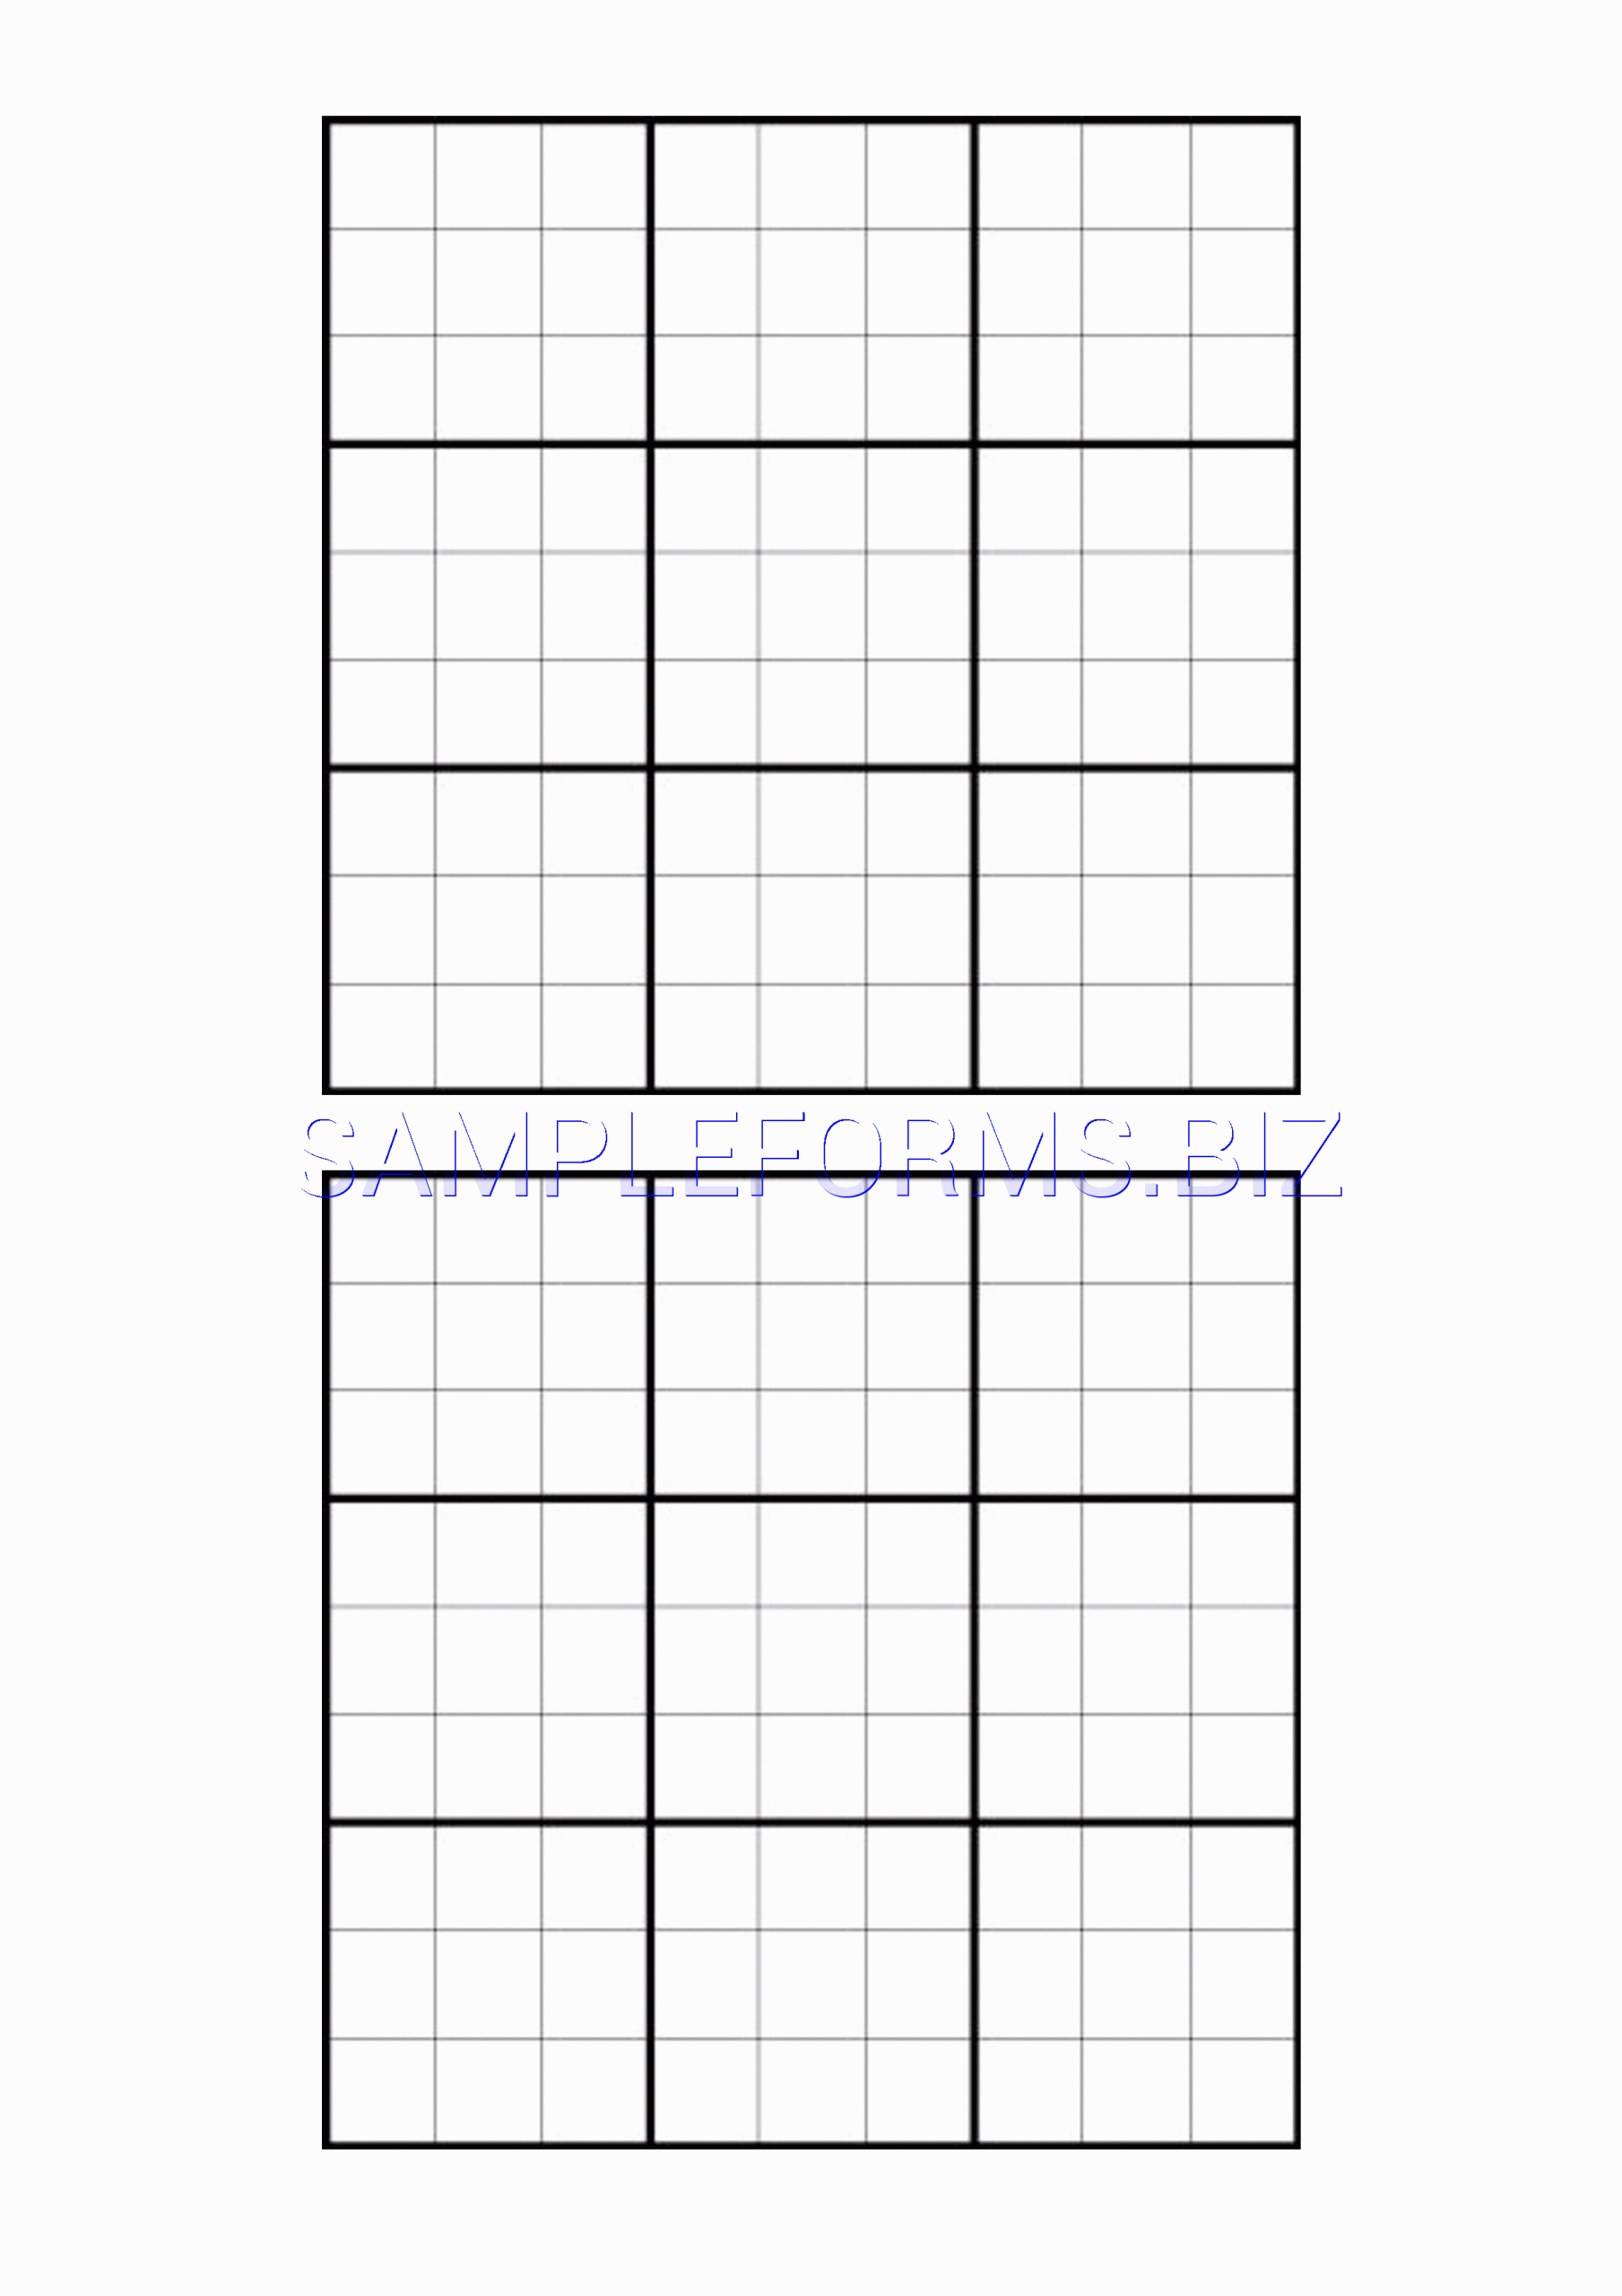 Preview Pdf Blank Sudoku Grid, 1